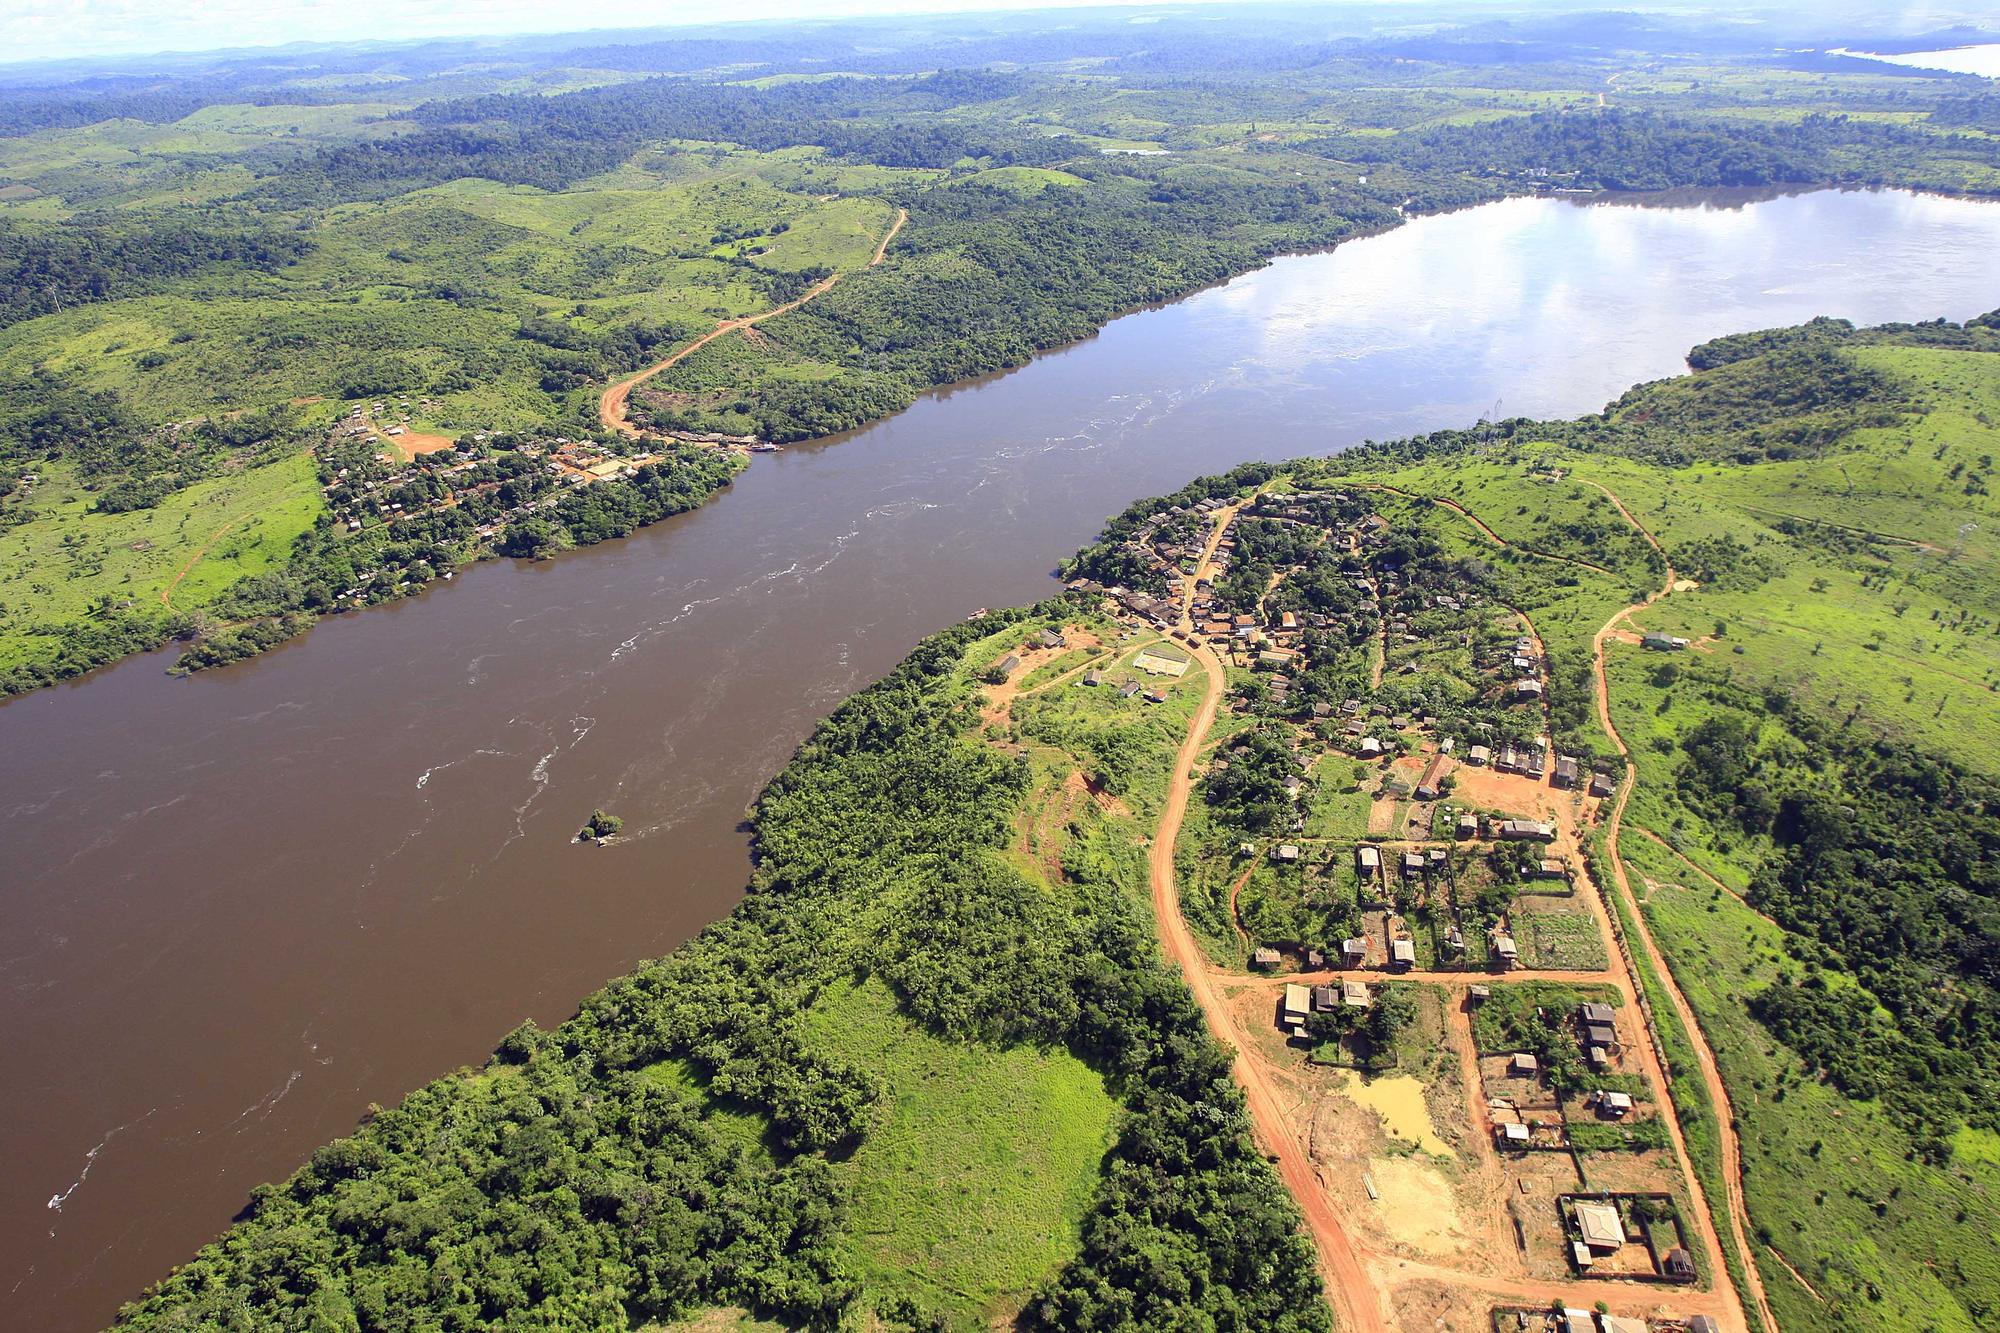 Vue aérienne de Para, où le site de Belo Monte est prévu. [Agência Estado - Dida Sampaio]